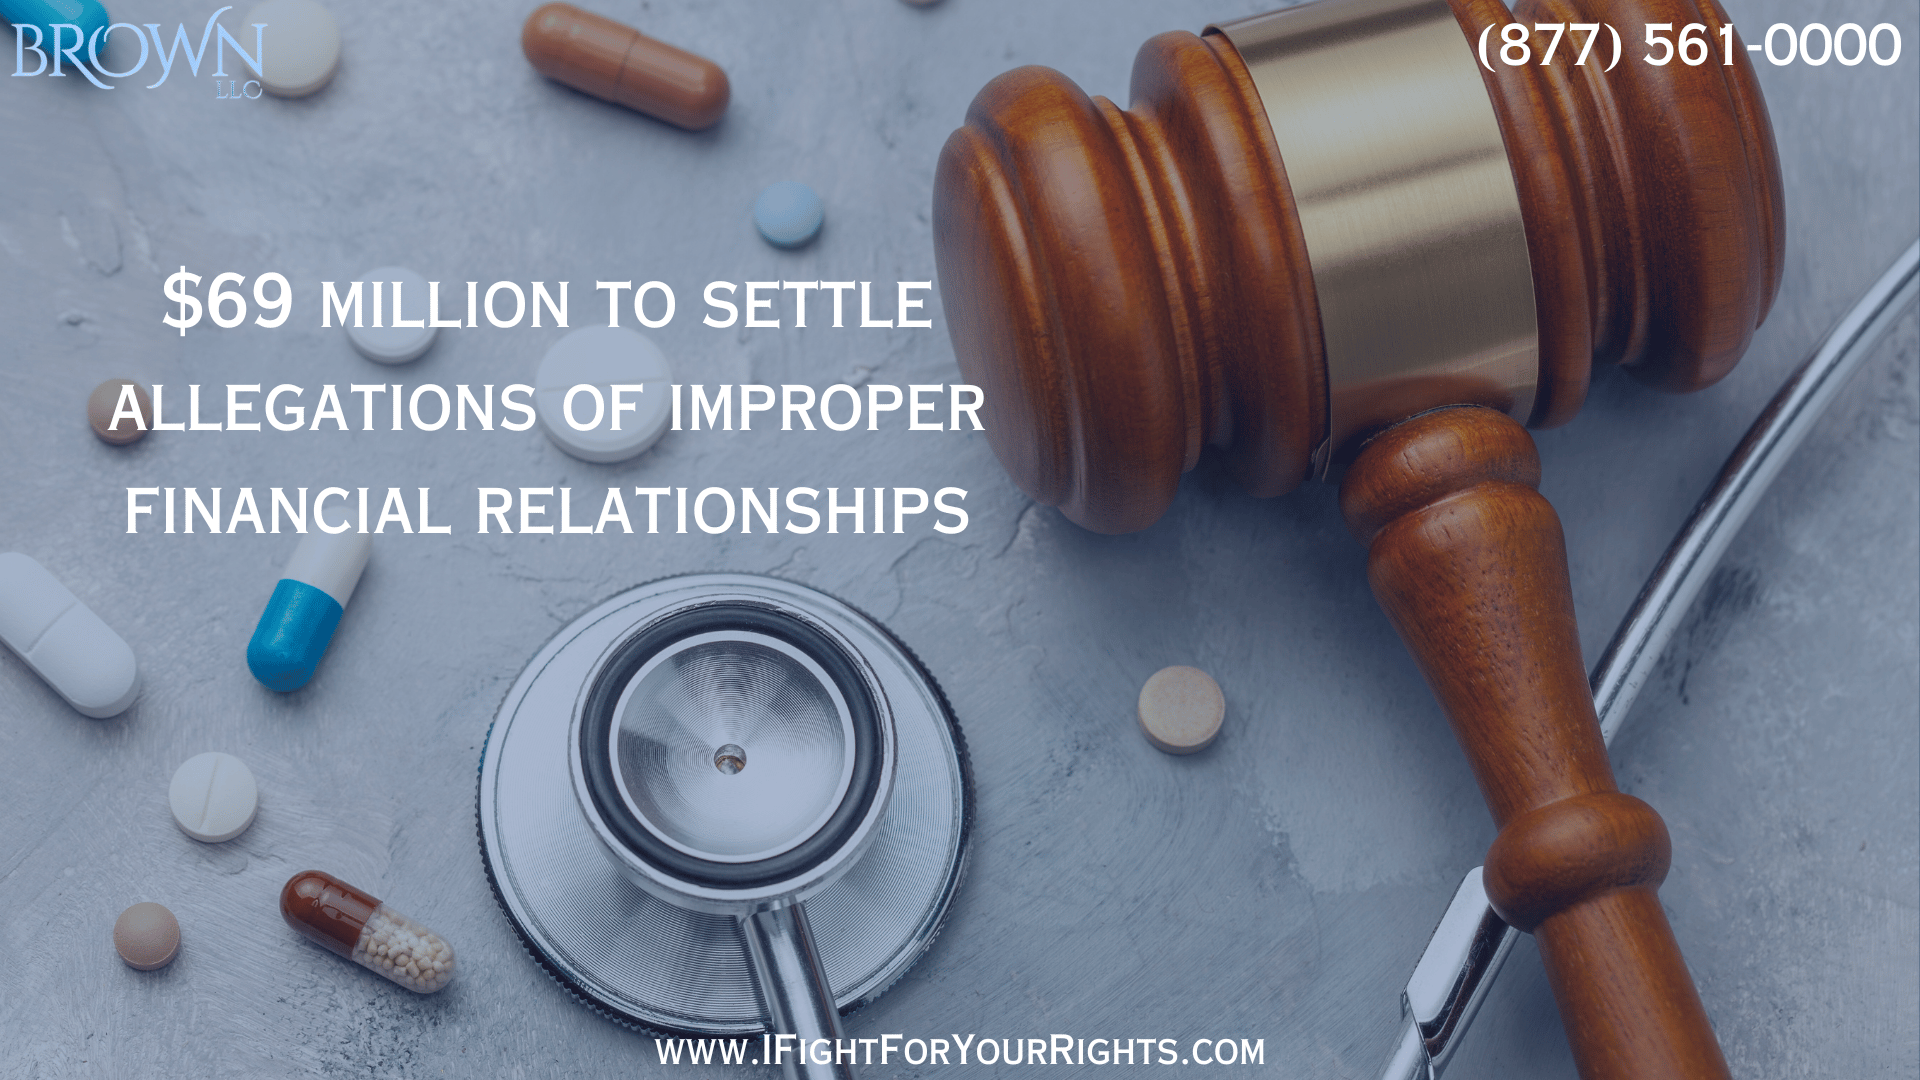 $69 million to settle allegations of improper financial relationships